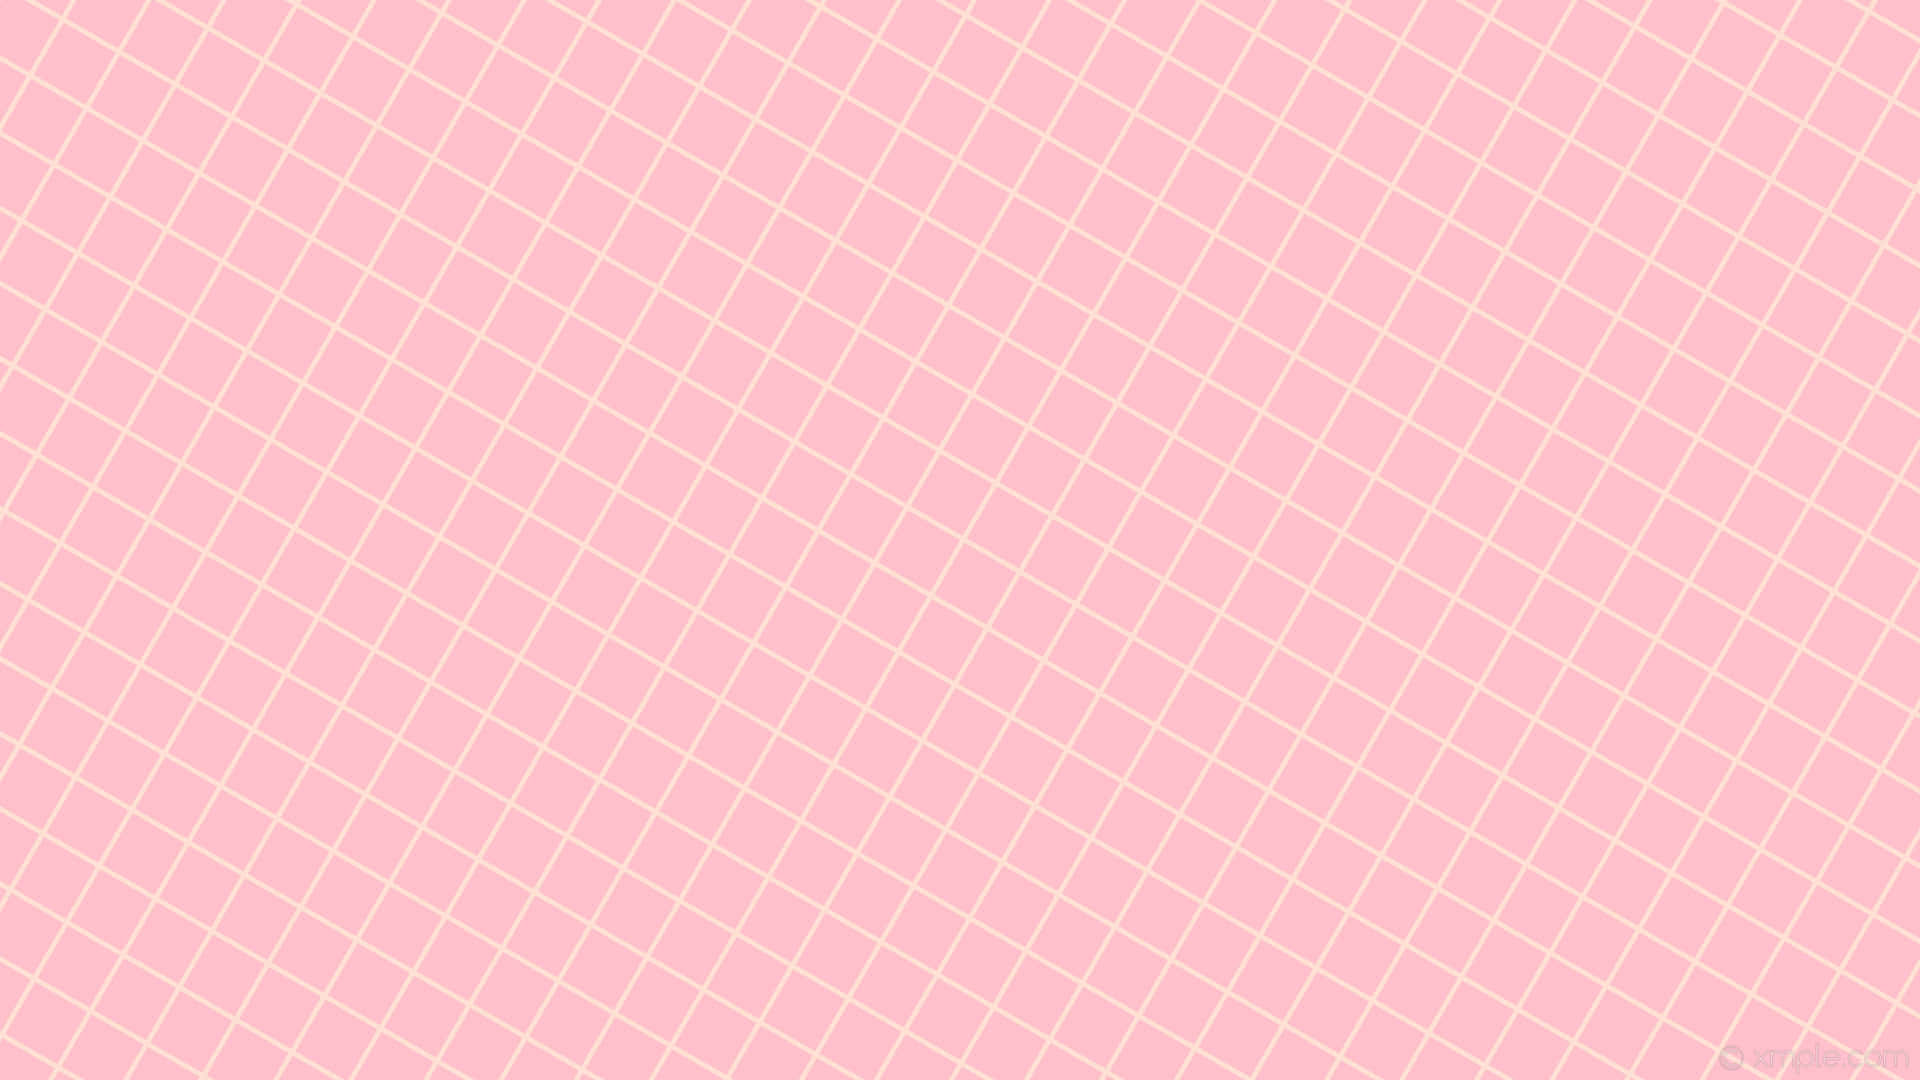 Pink Grid Background Images  Free Download on Freepik